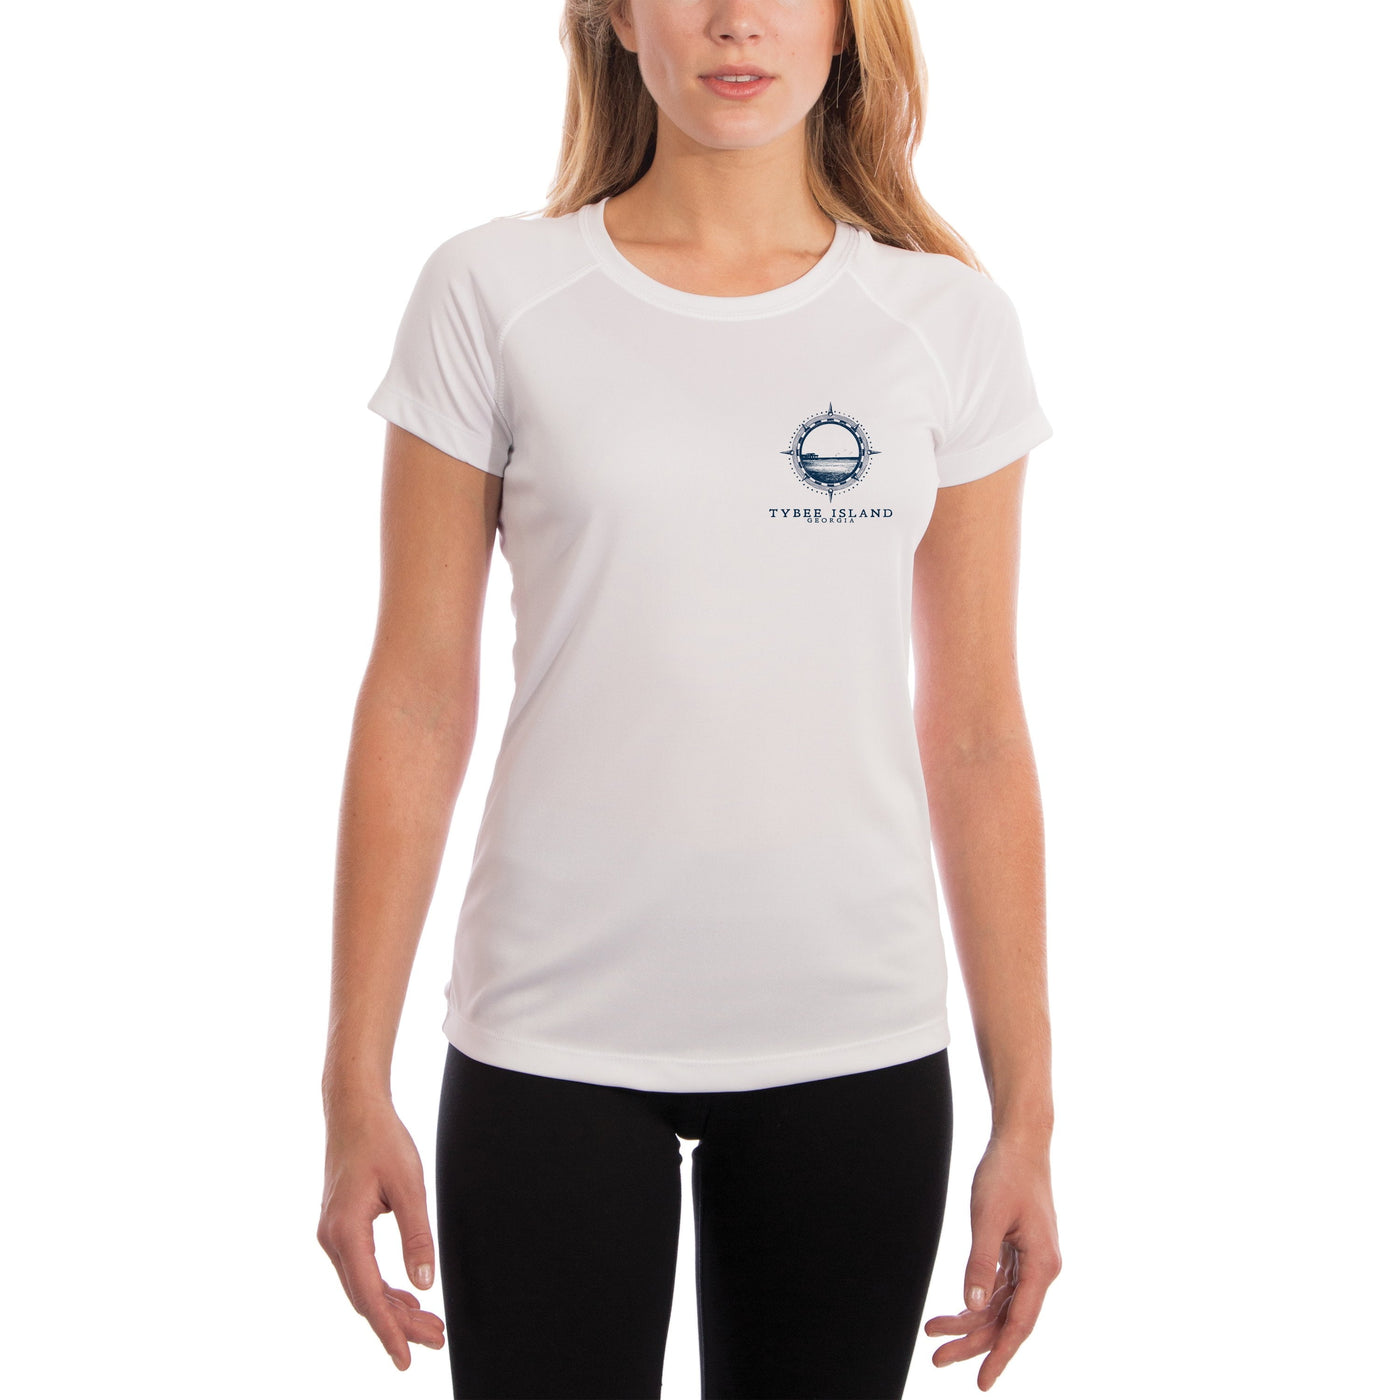 Compass Vintage Tybee Island Women's UPF 50+ Classic Fit Short Sleeve T-shirt